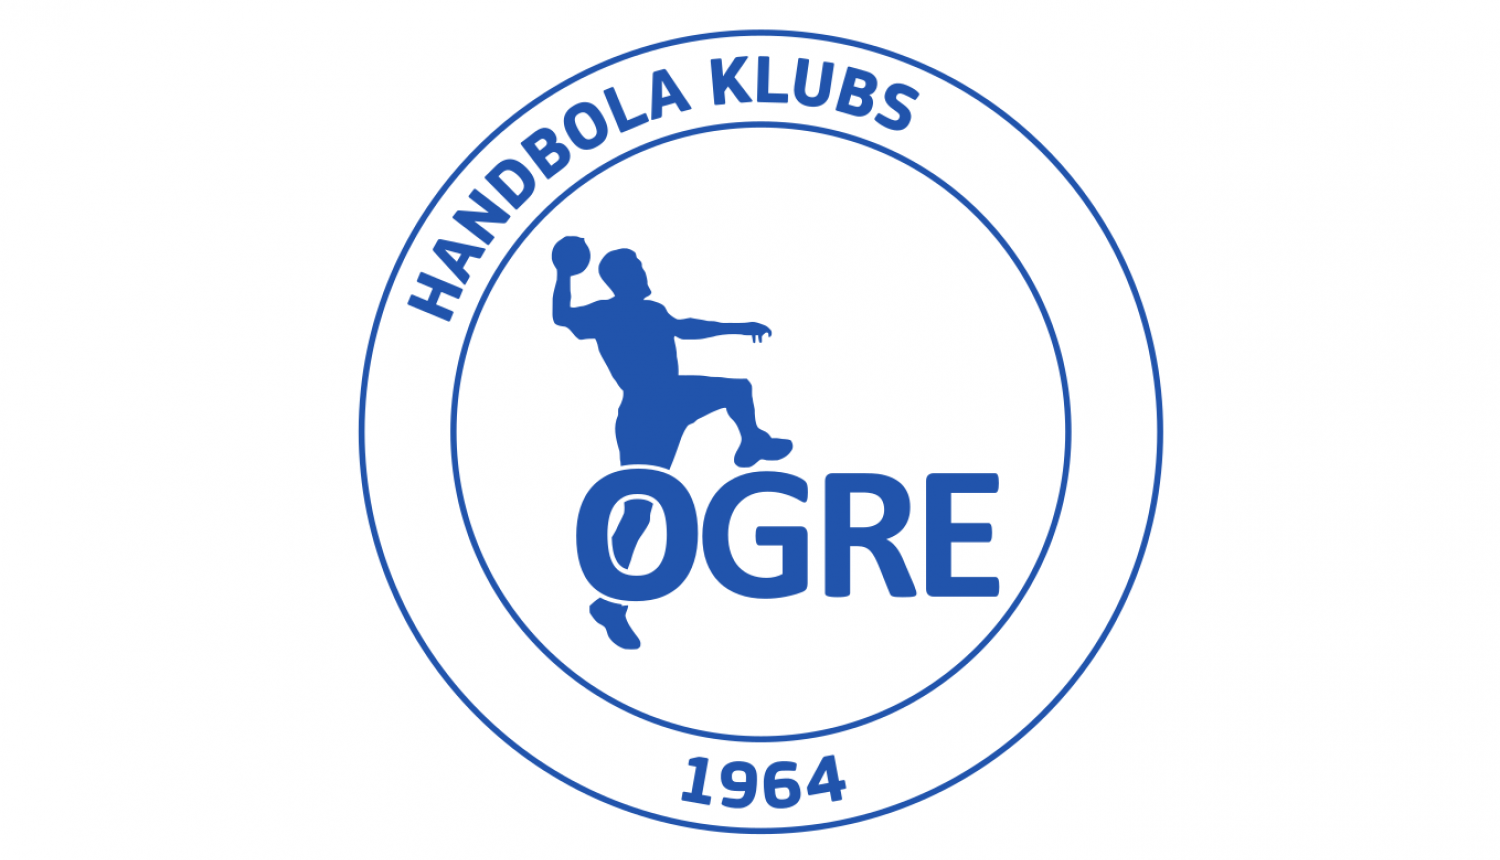 Handbola kluba Ogre logo